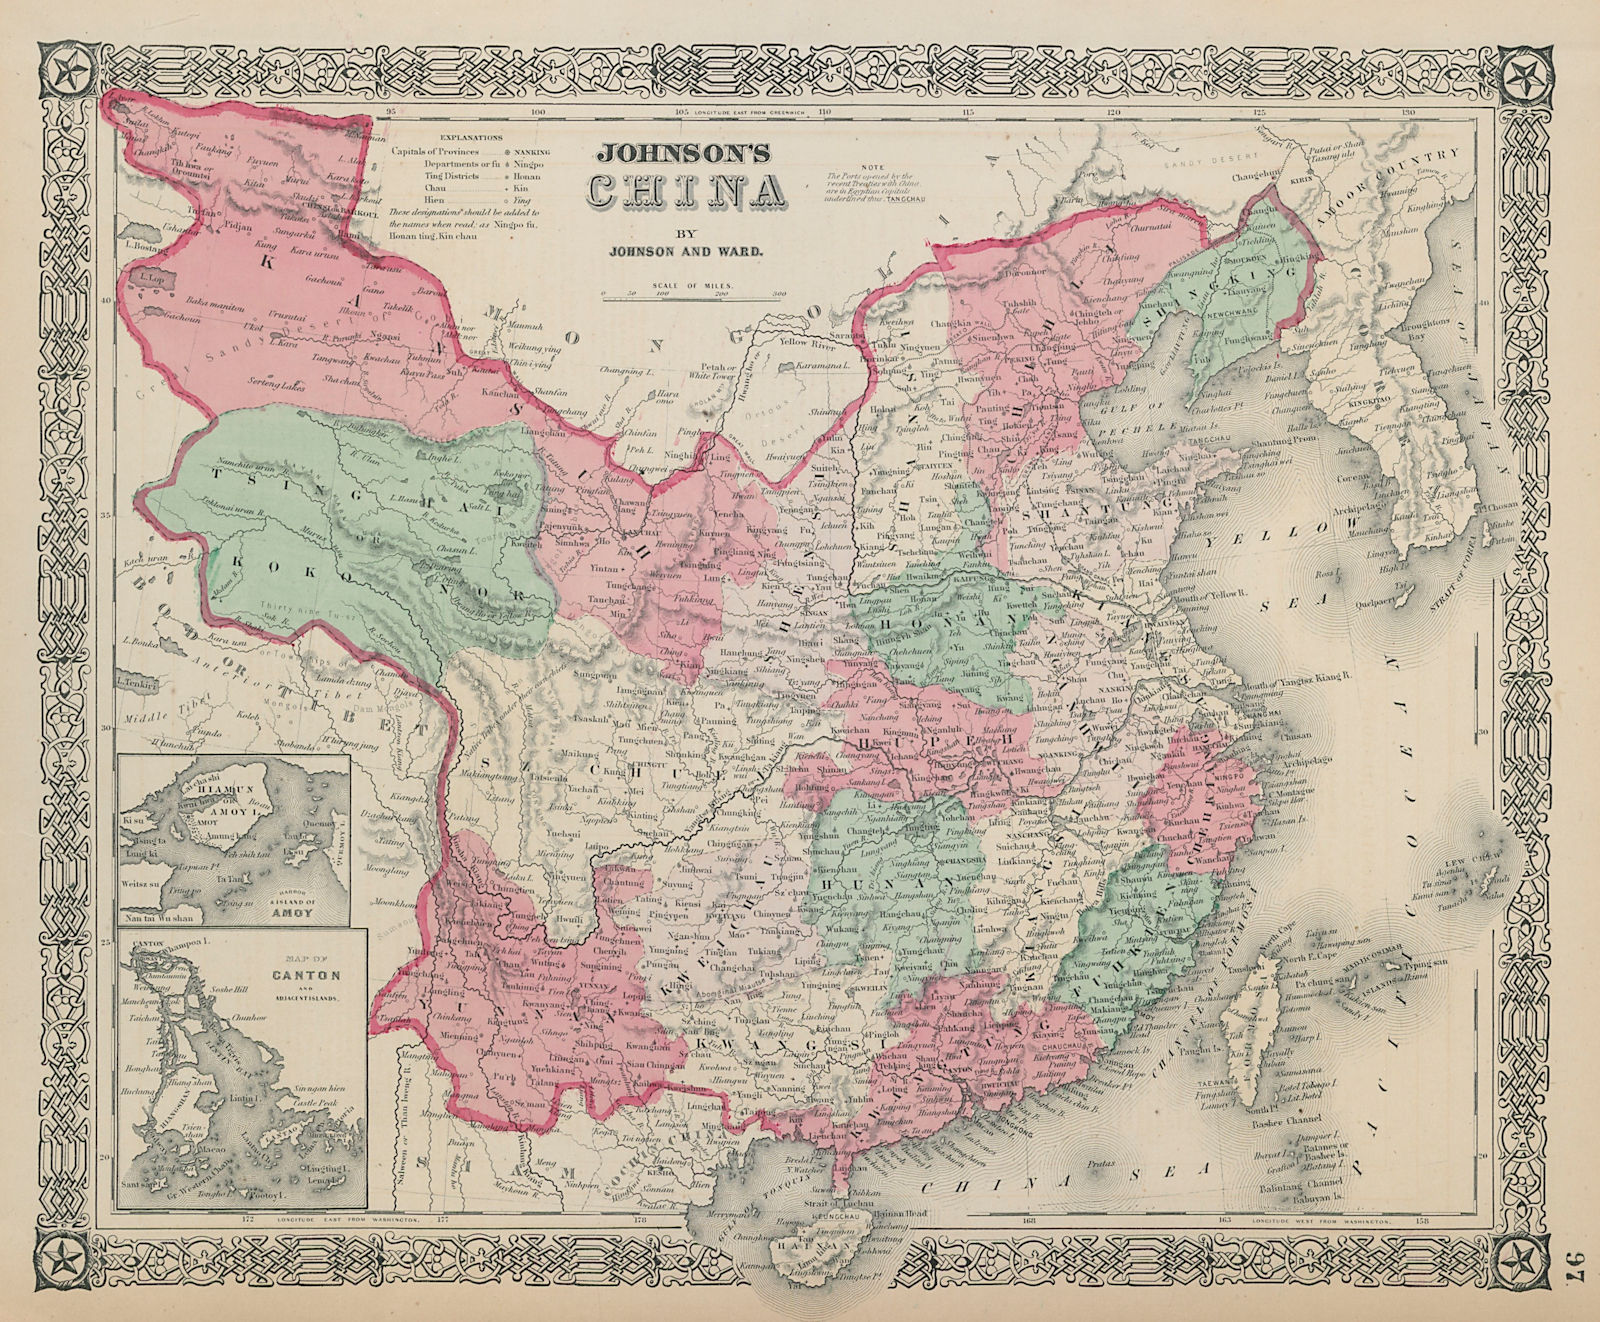 Associate Product Johnson's China. Amoy Xiamen Harbor. Canton Hong Kong 1865 old antique map